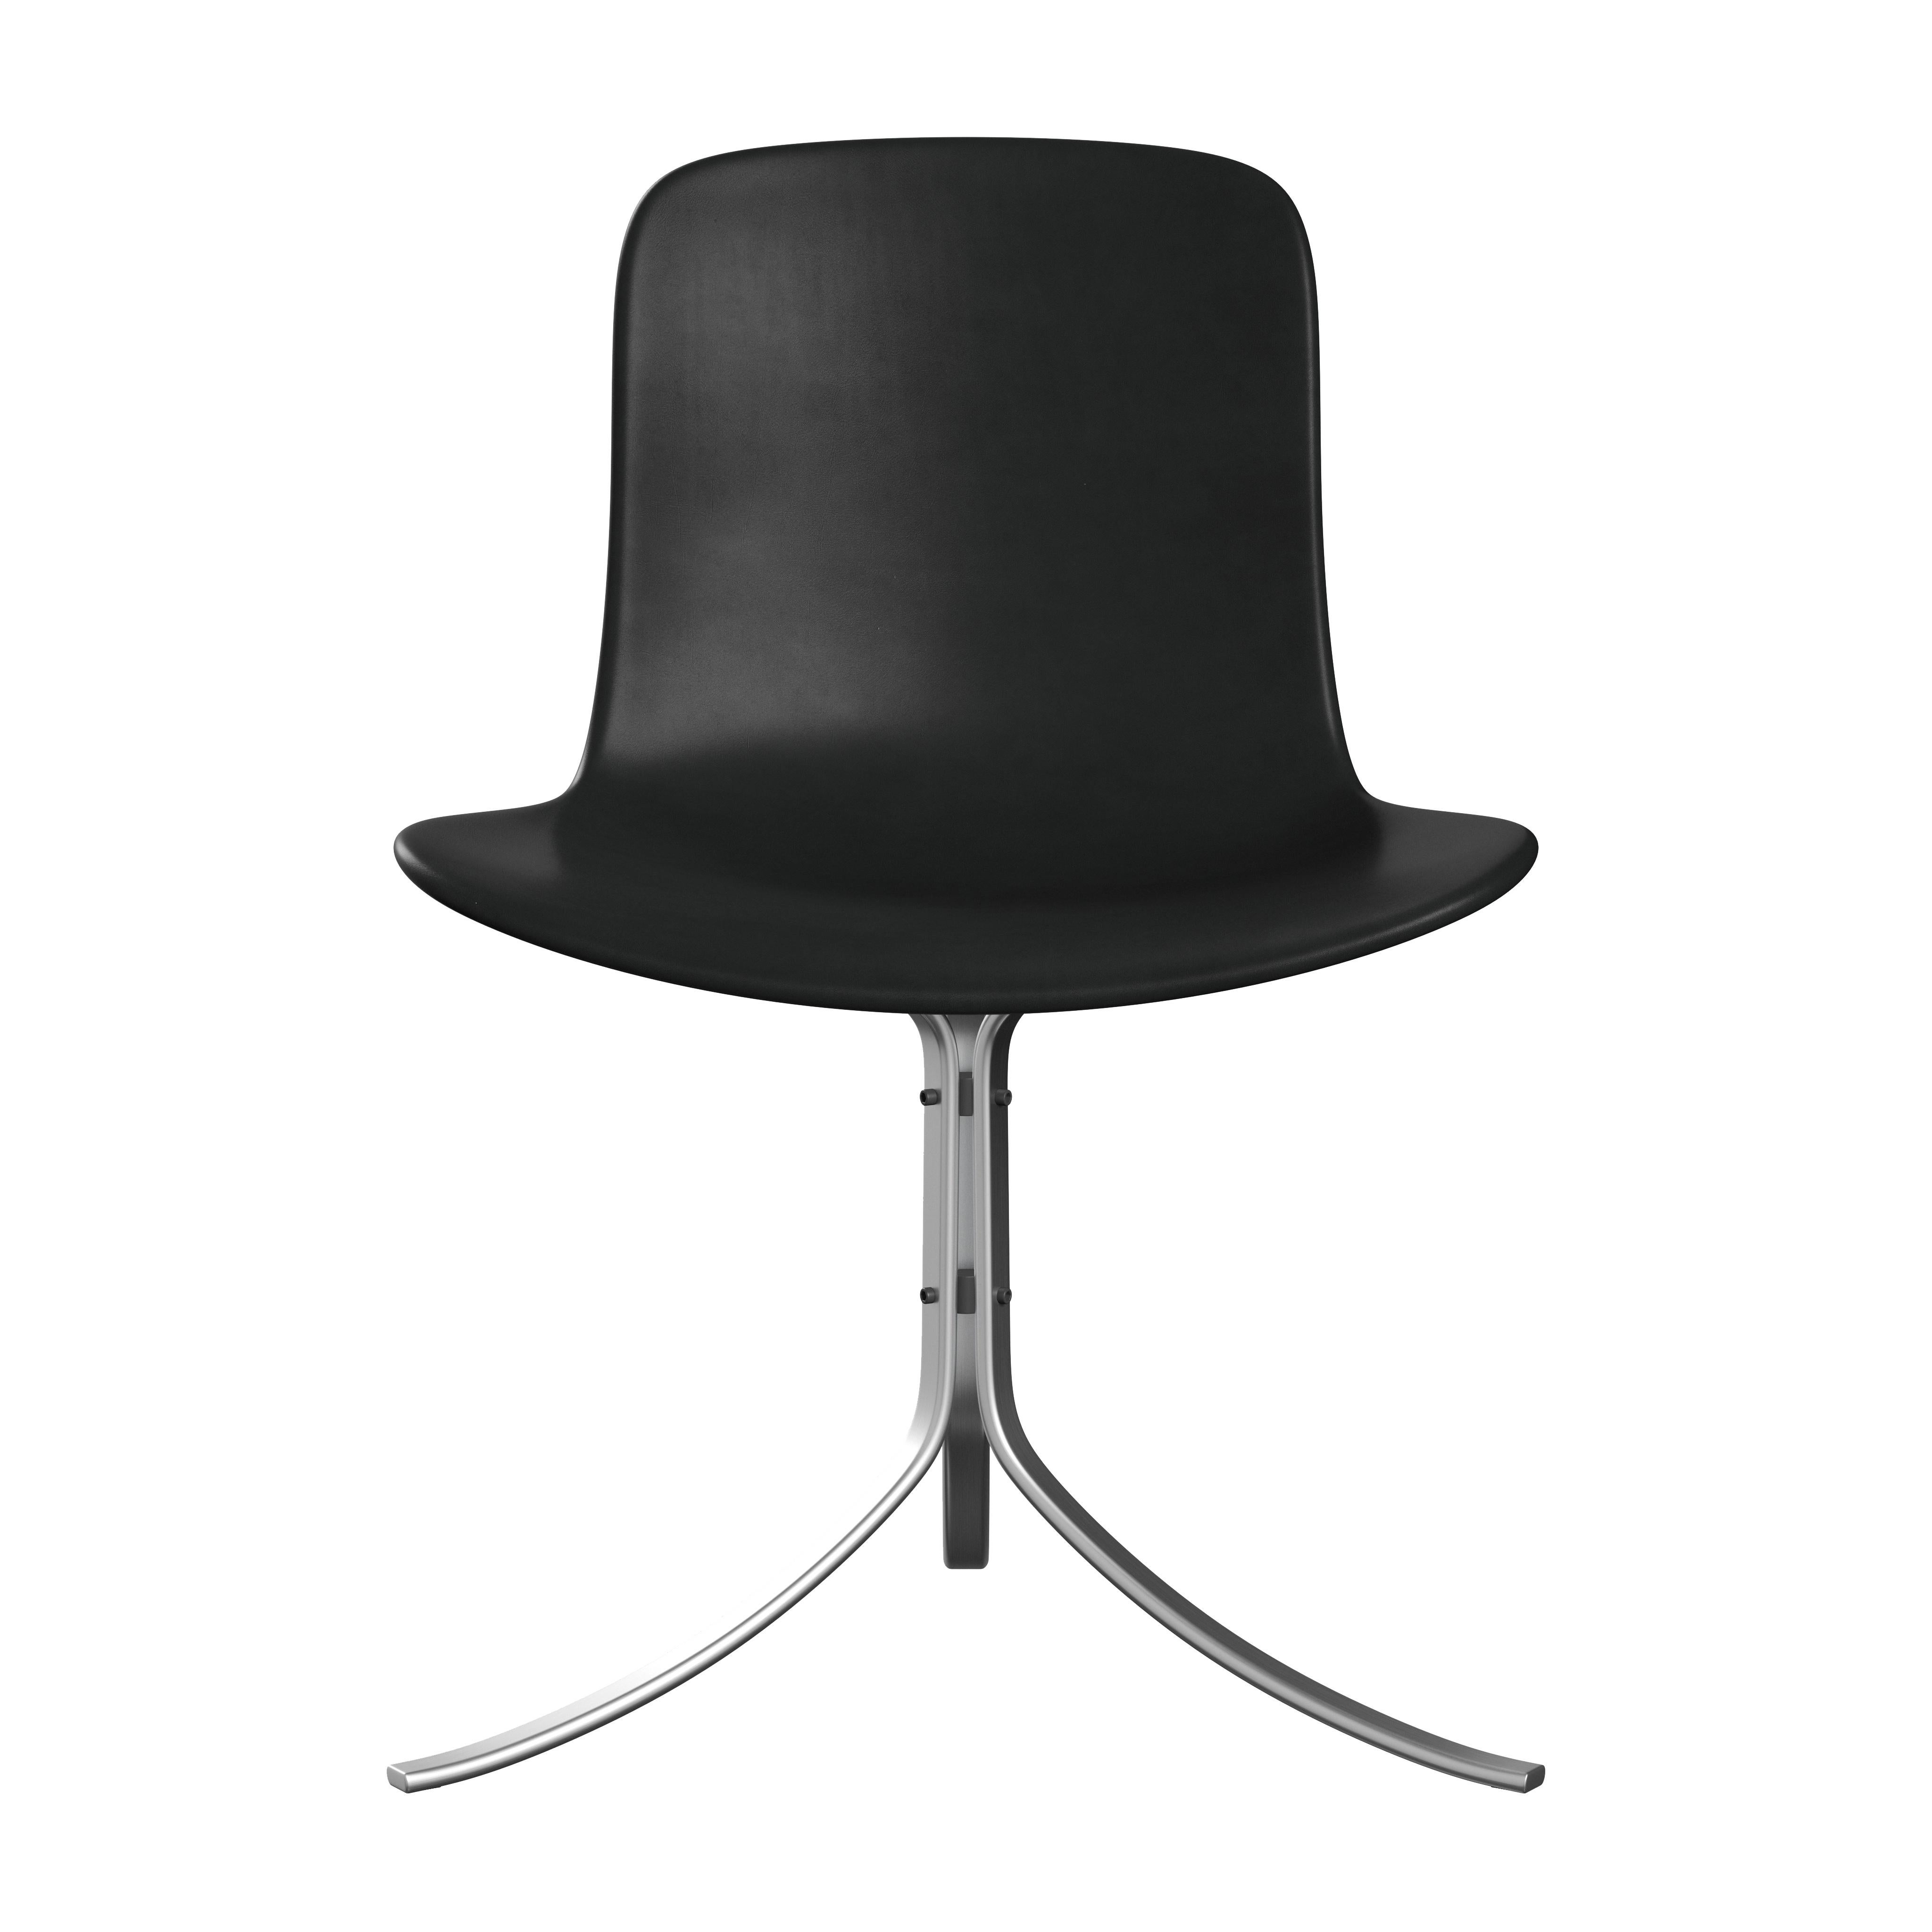 Poul Kjærholm 'PK9' Dining Chair for Fritz Hansen in Leather (Cat. 5) For Sale 4